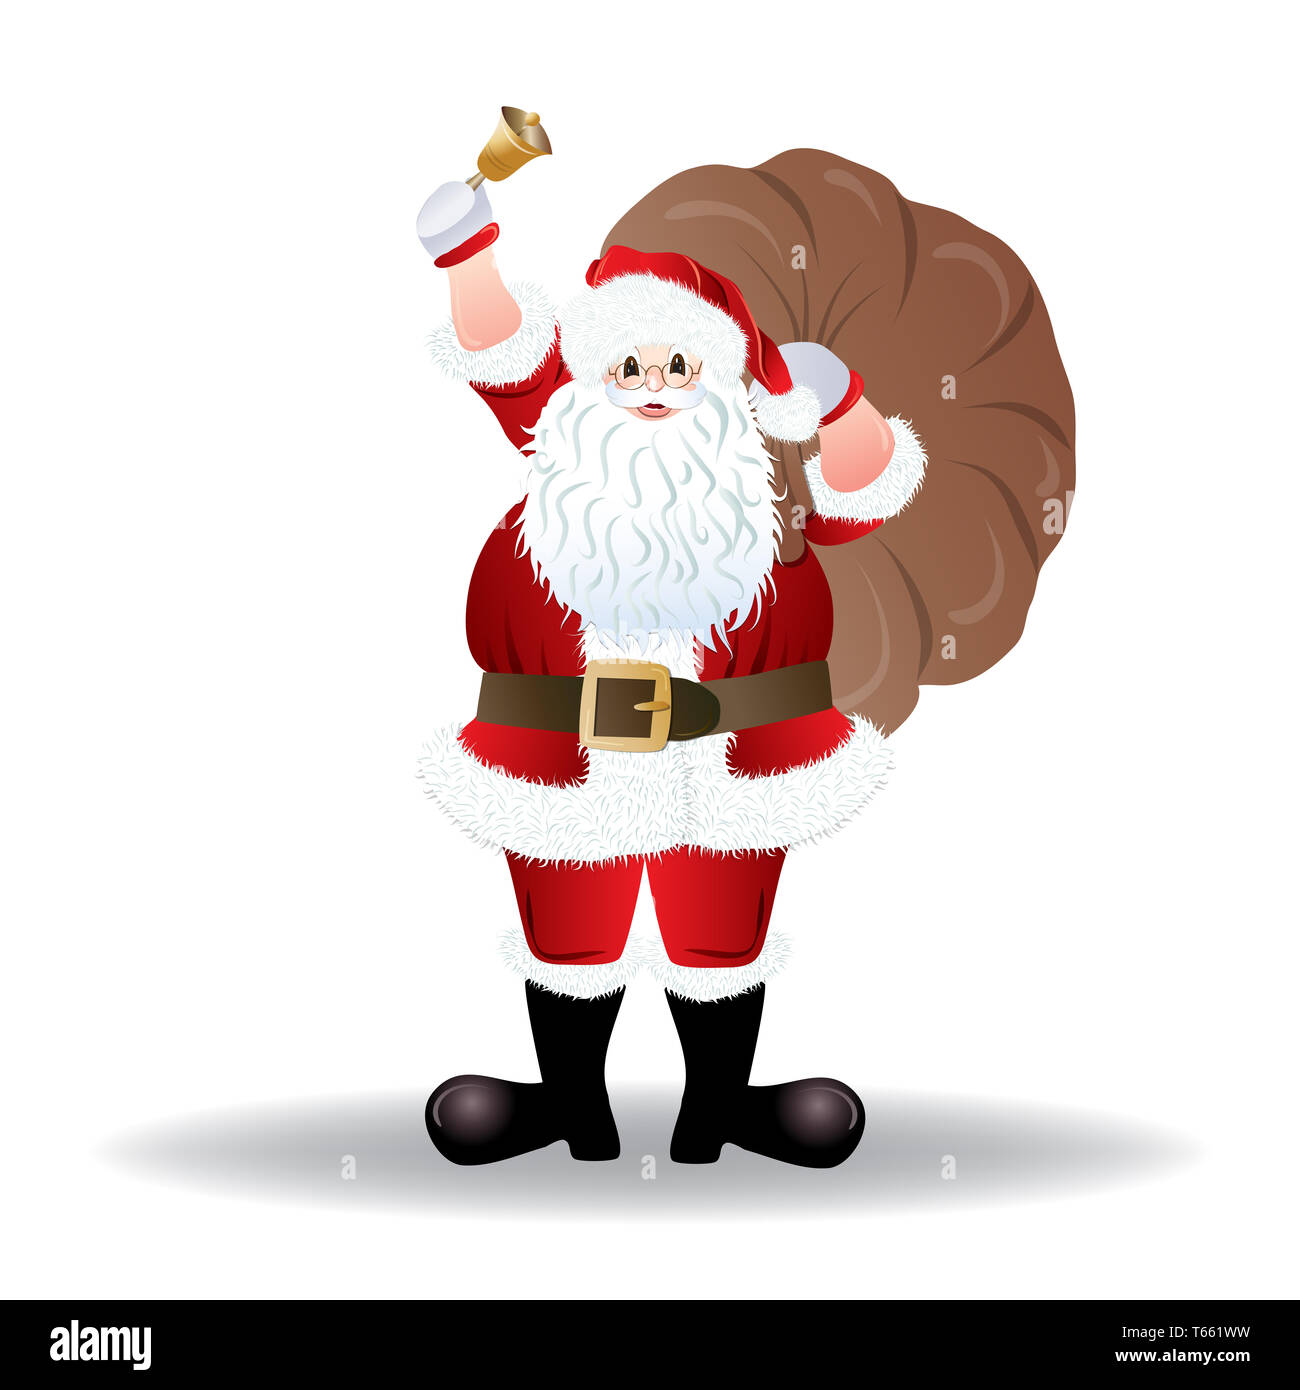 Santa Claus, greeting card design Stock Photo